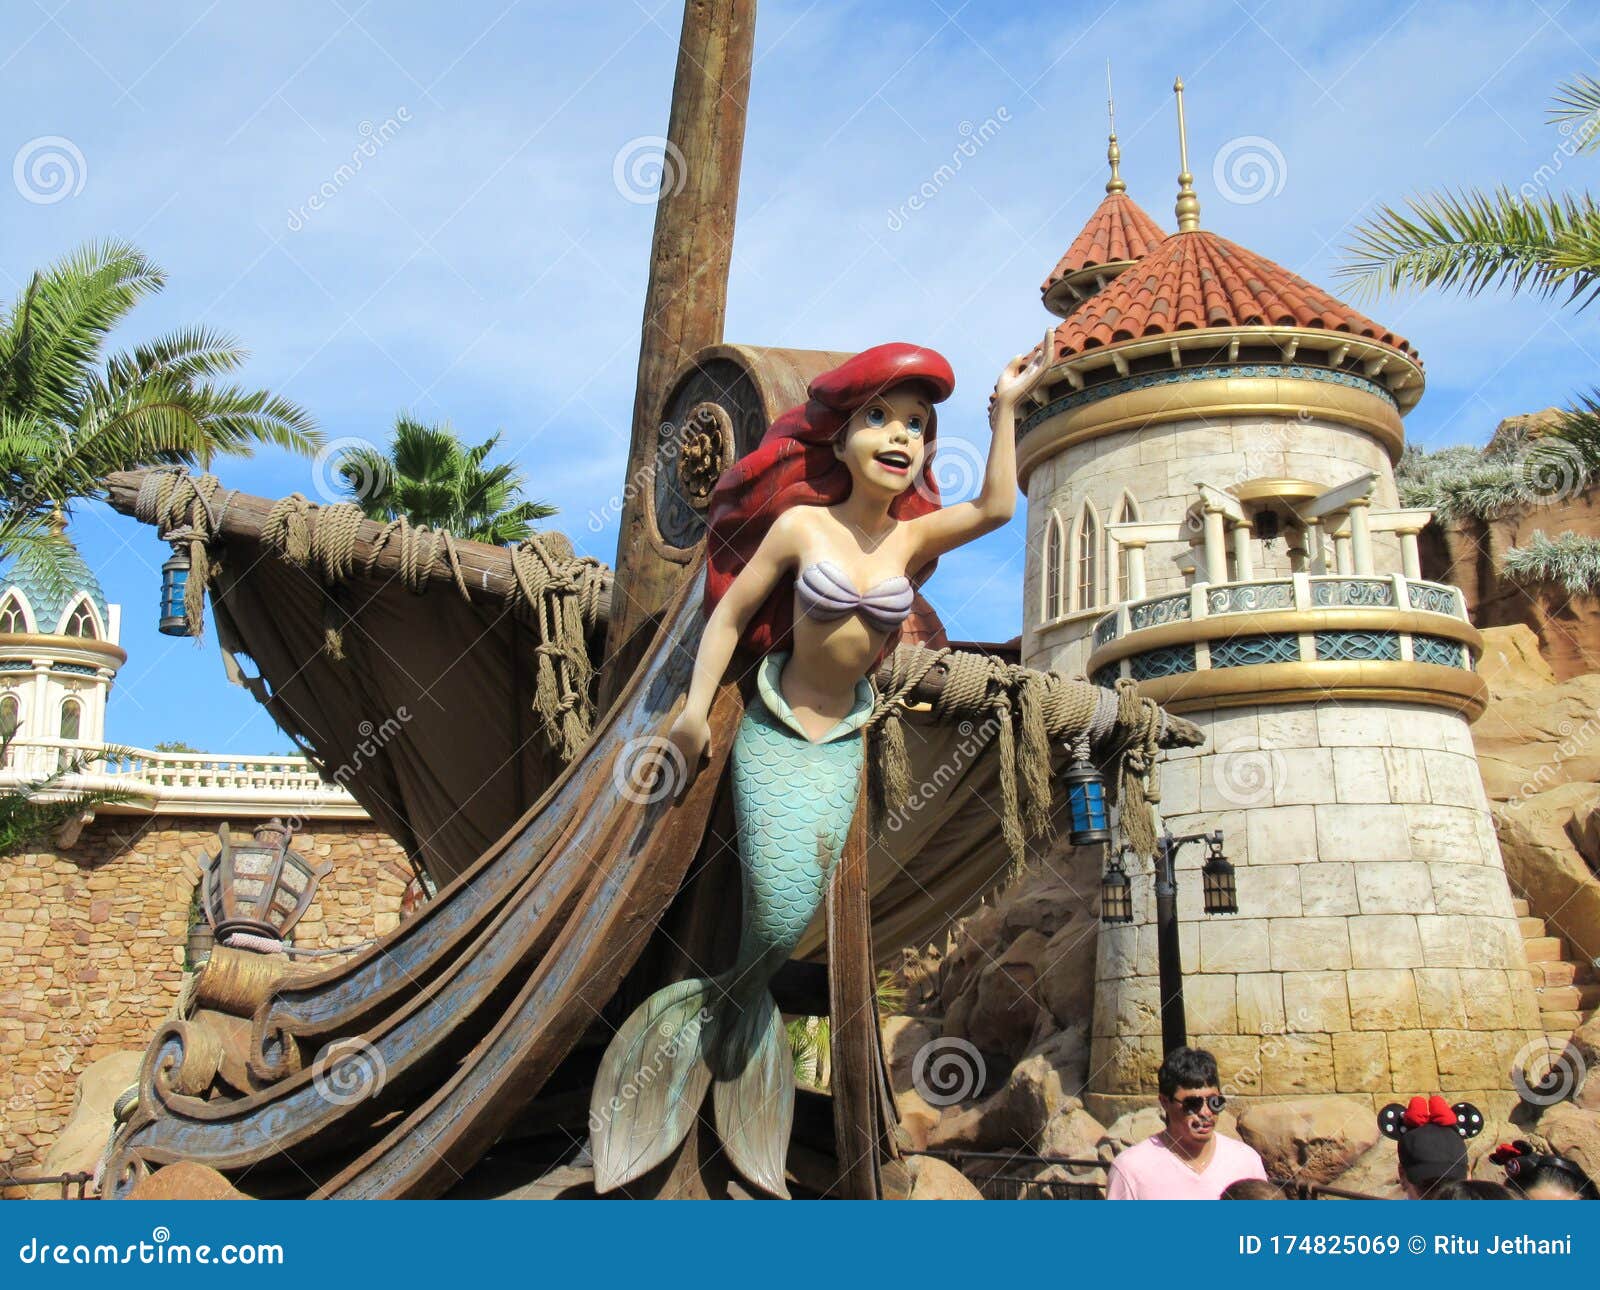 Under The Sea Journey Of The Little Mermaid Ride At Walt Disney Magic Kingdom Park Near Orlando In Florida Editorial Stock Image Image Of States Disneys